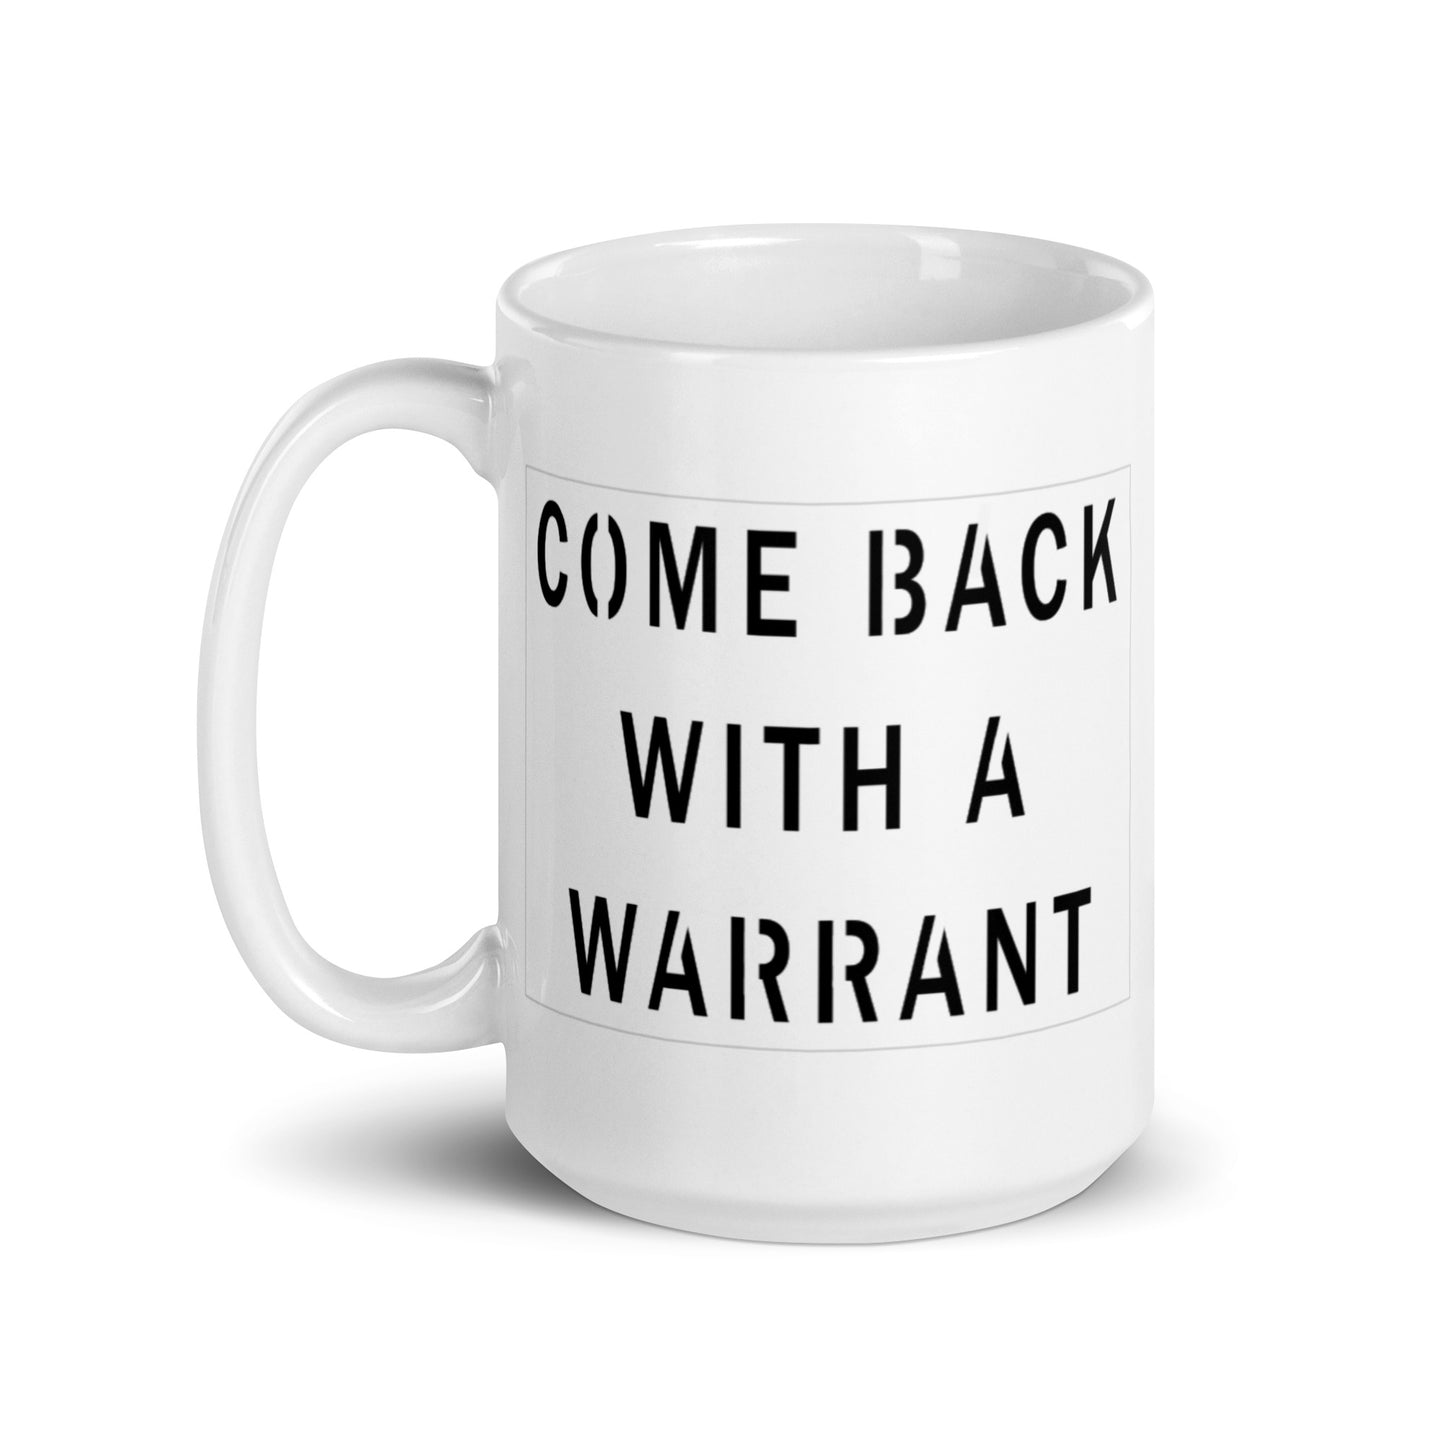 Come Back With a Warrant White glossy mug